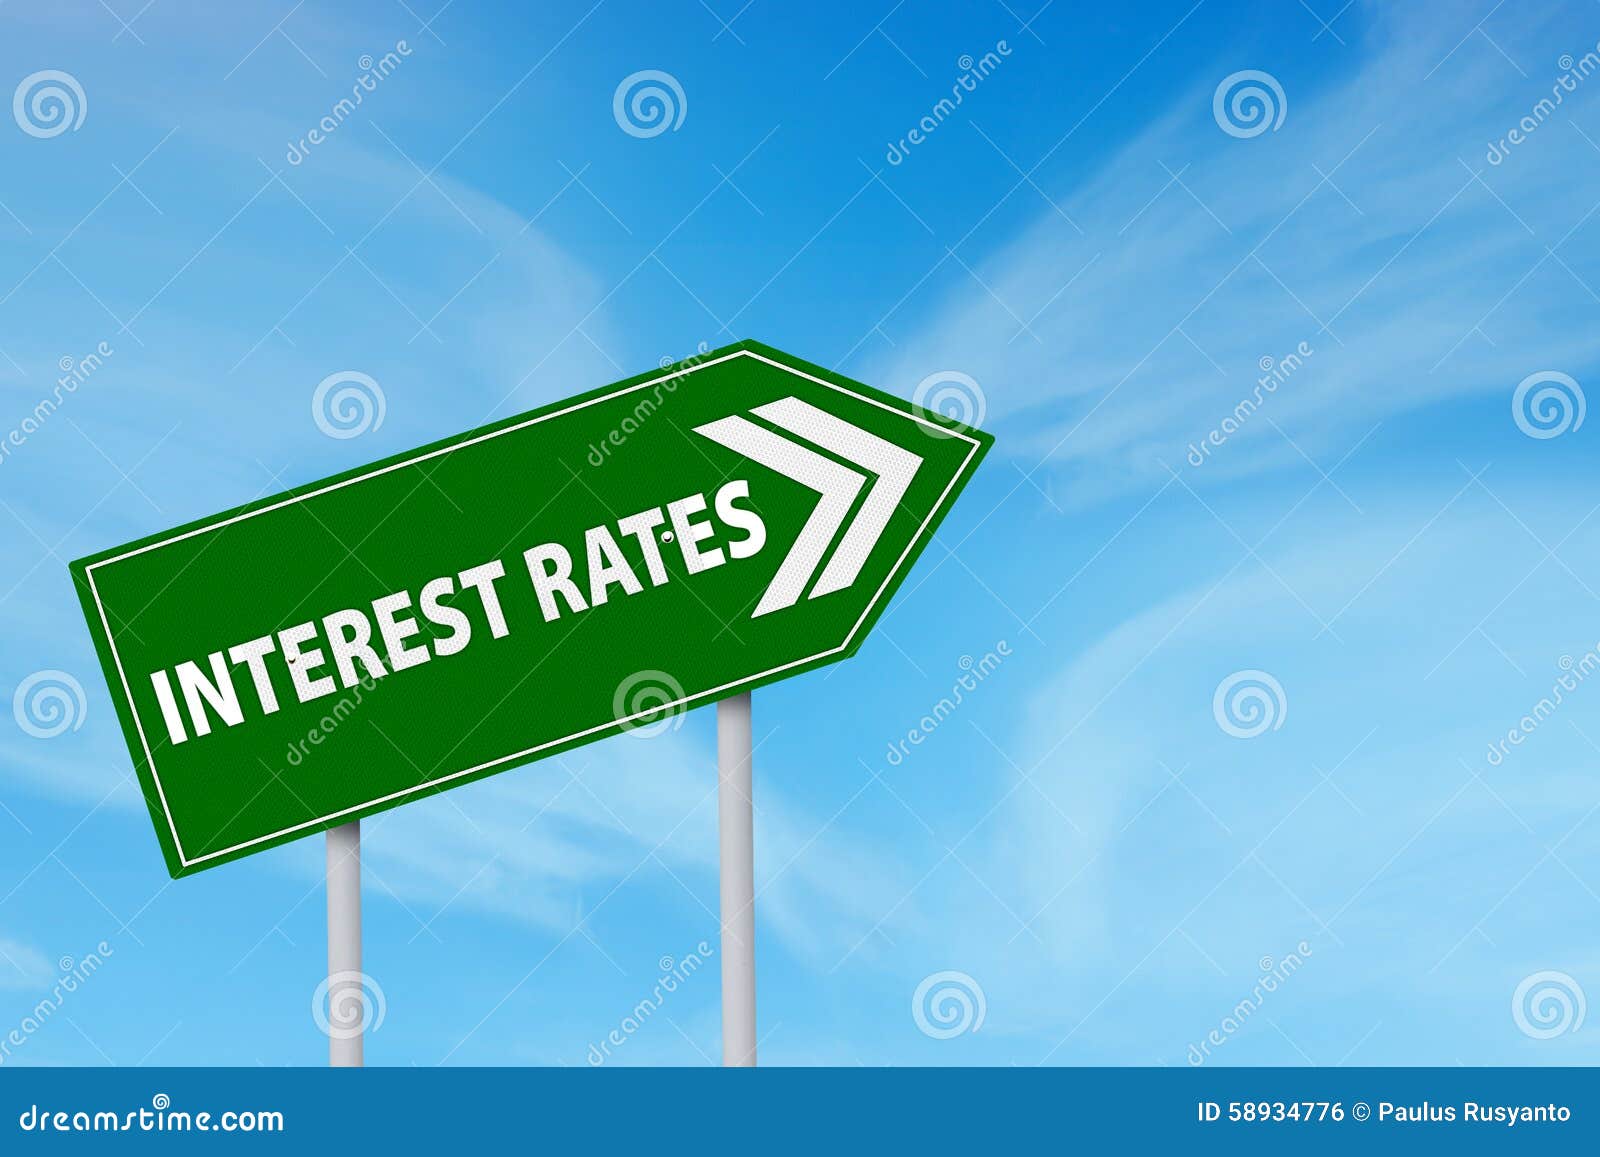 higher interest rates